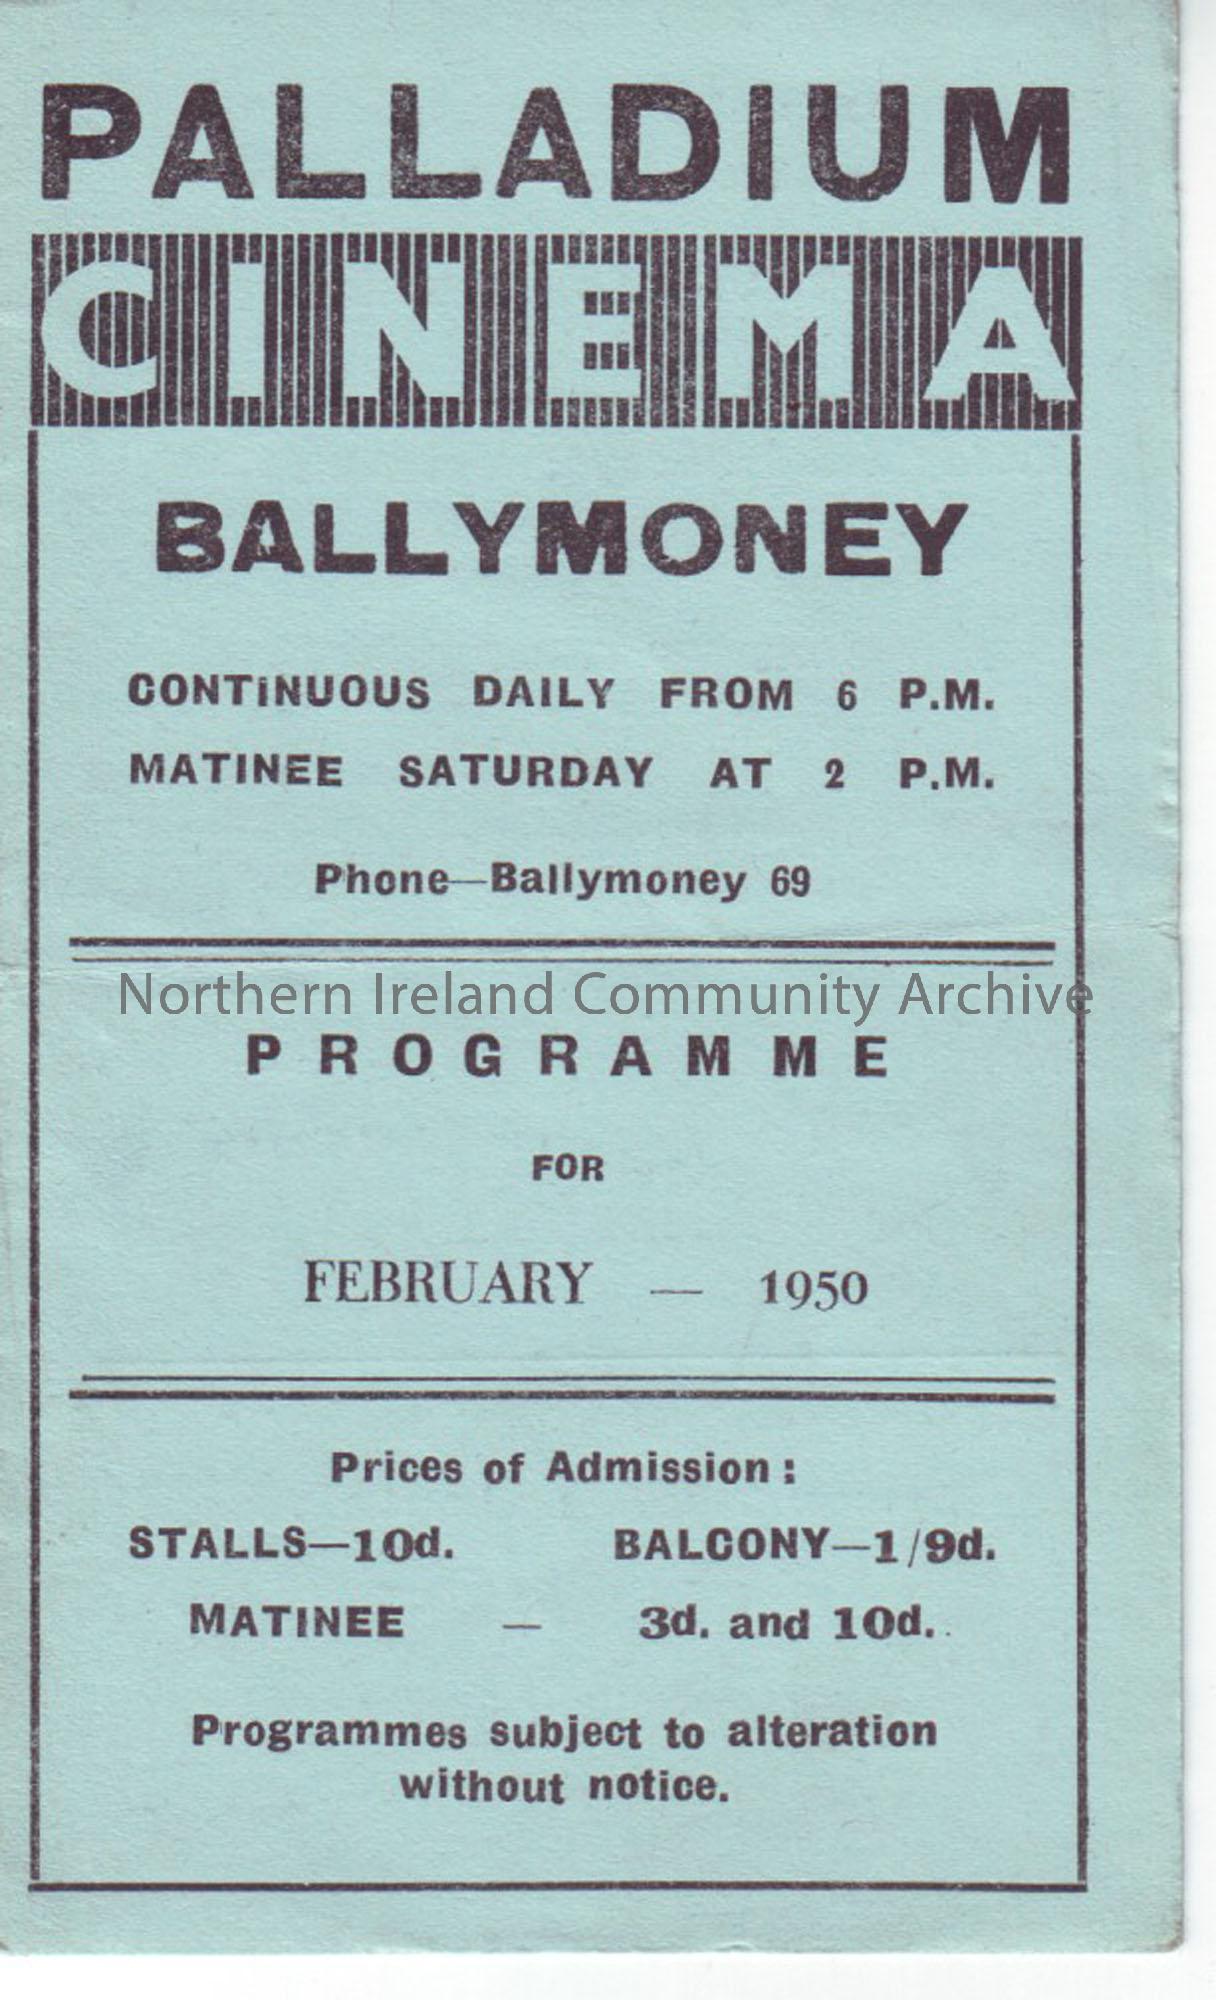 blue monthly programme for Ballymoney Palladium cinema- February 1950